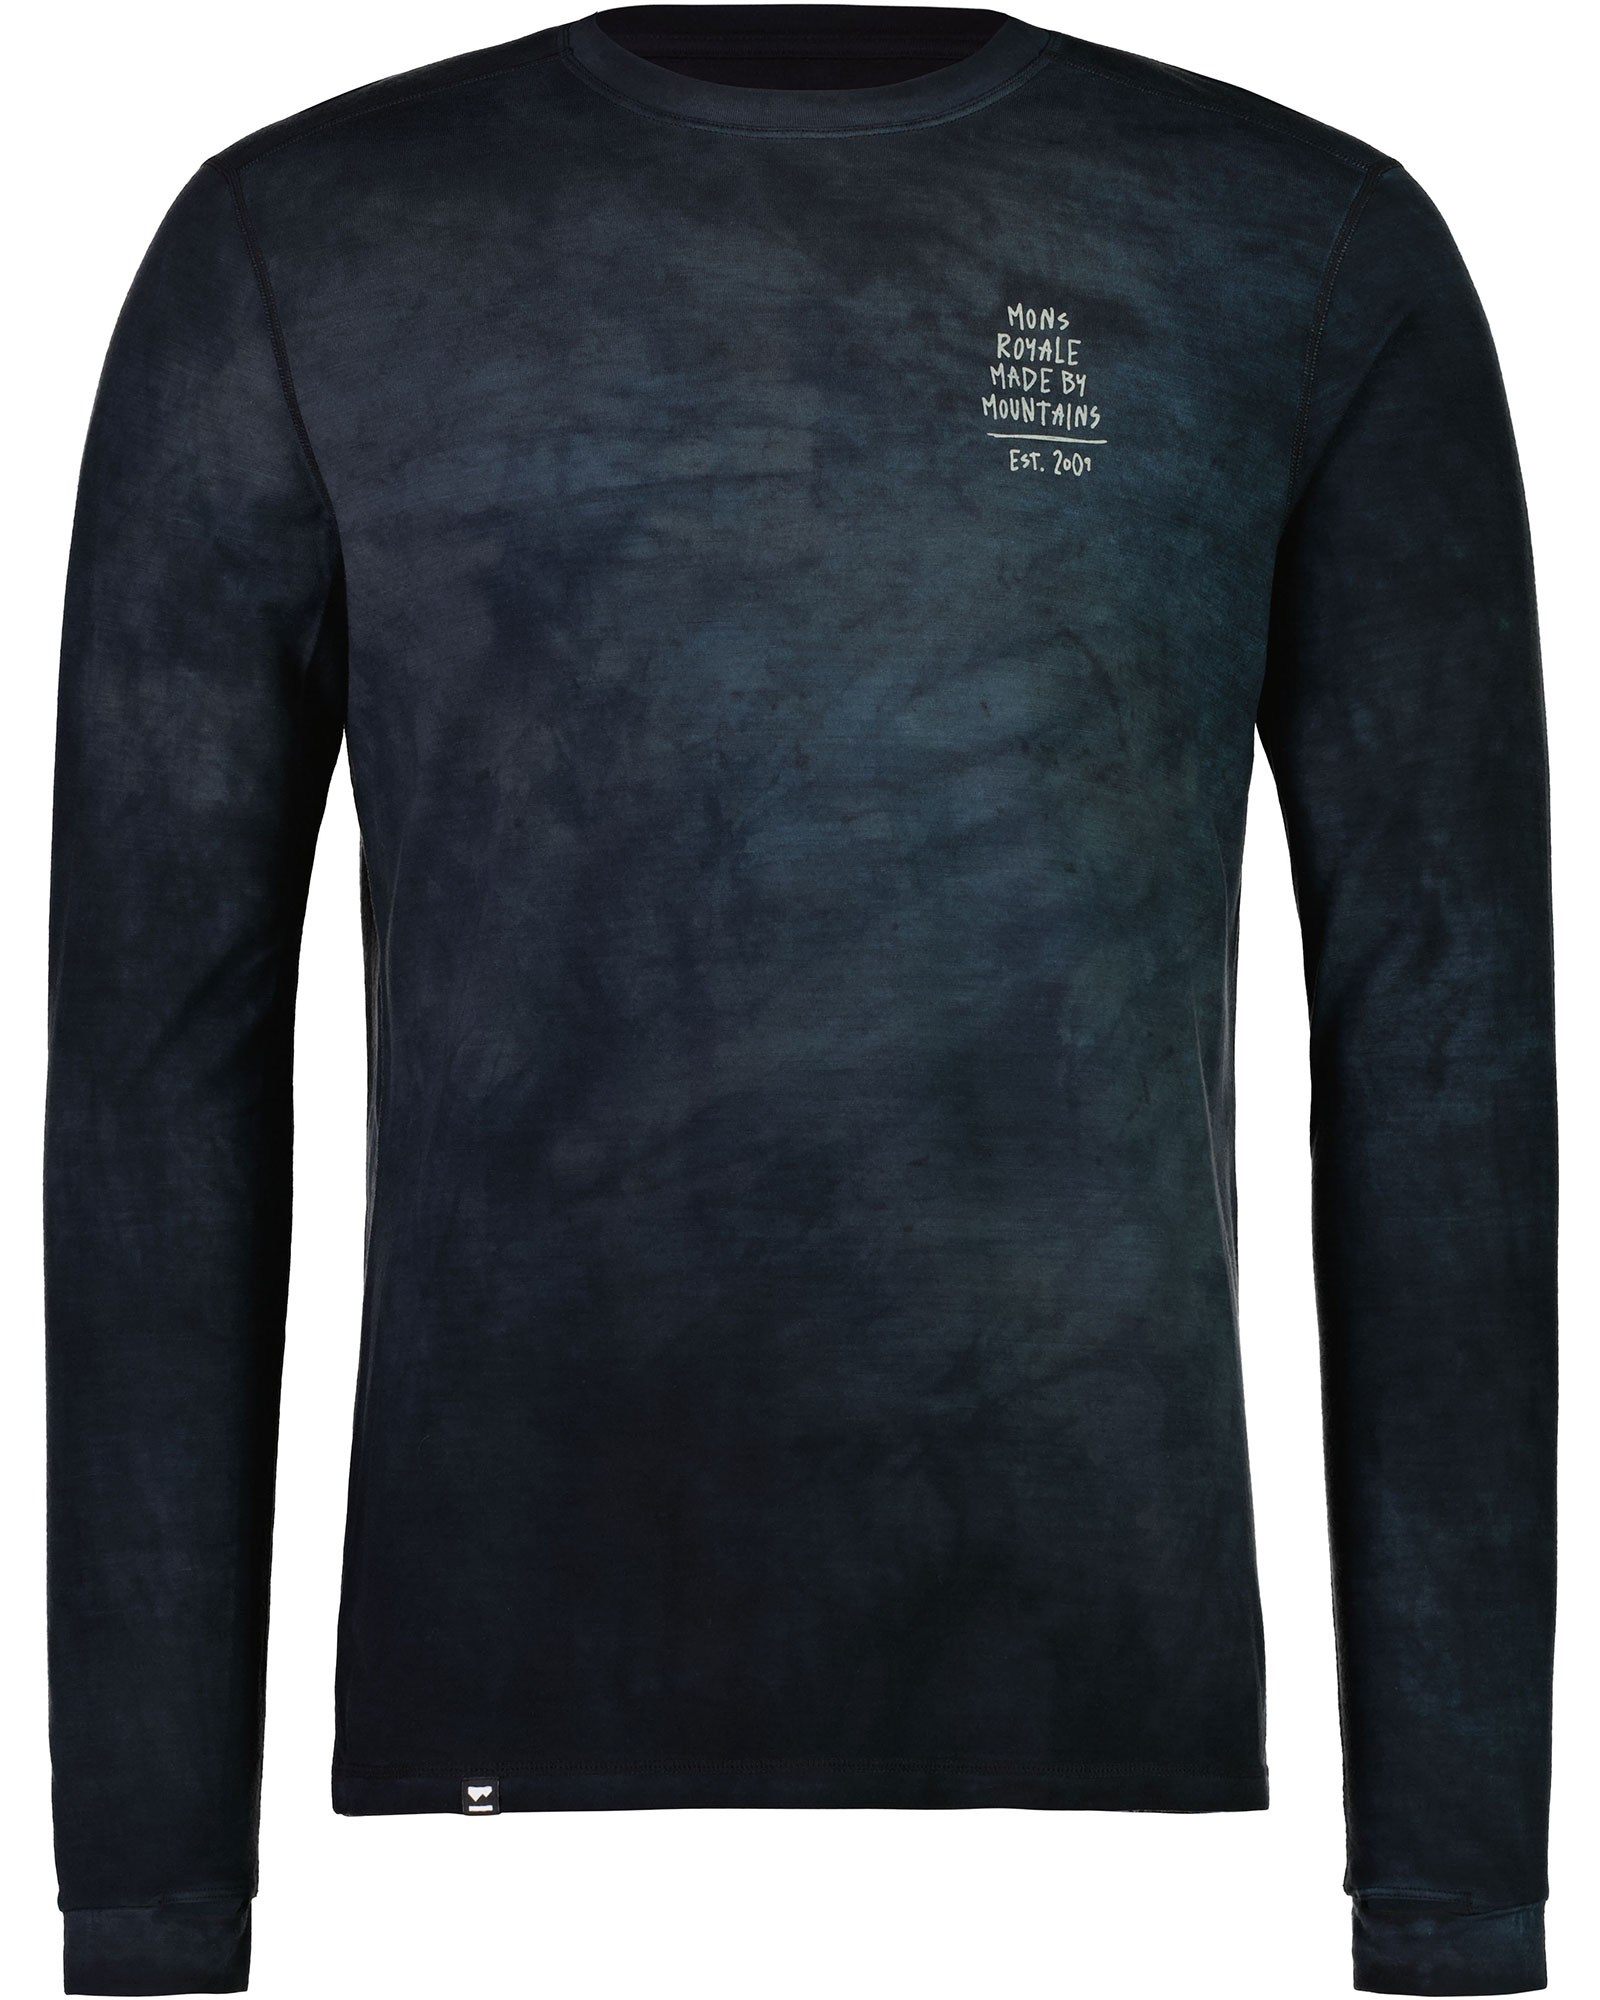 Mons Royale Cascade Merino Flex 200 Men’s Long Sleeve T Shirt - Black Acid Wash XL